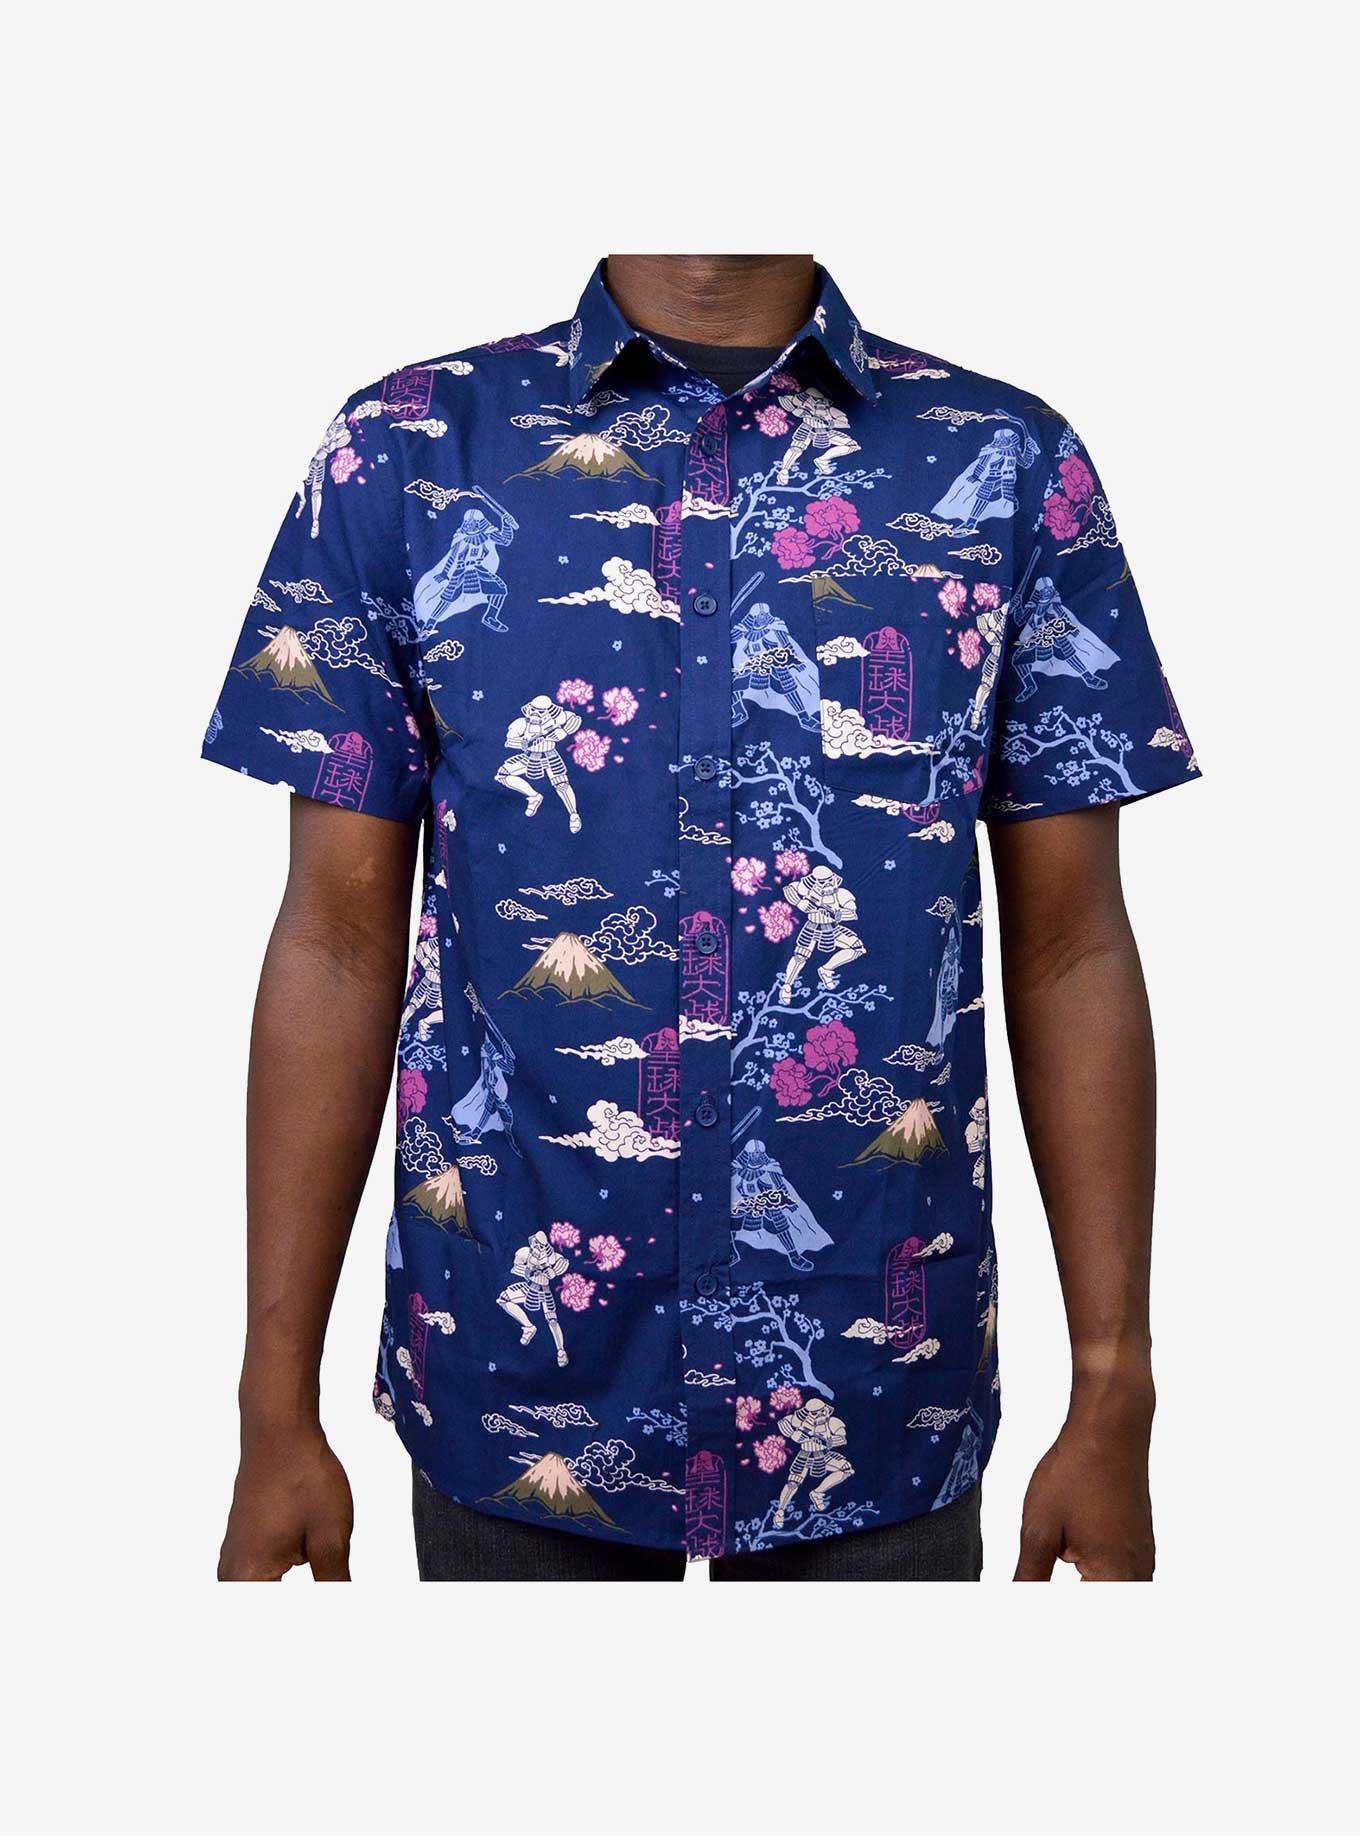 TORONTO BLUE JAYS BASEBALL HAWAIIAN SHIRT - Q-Finder Trending Design T Shirt